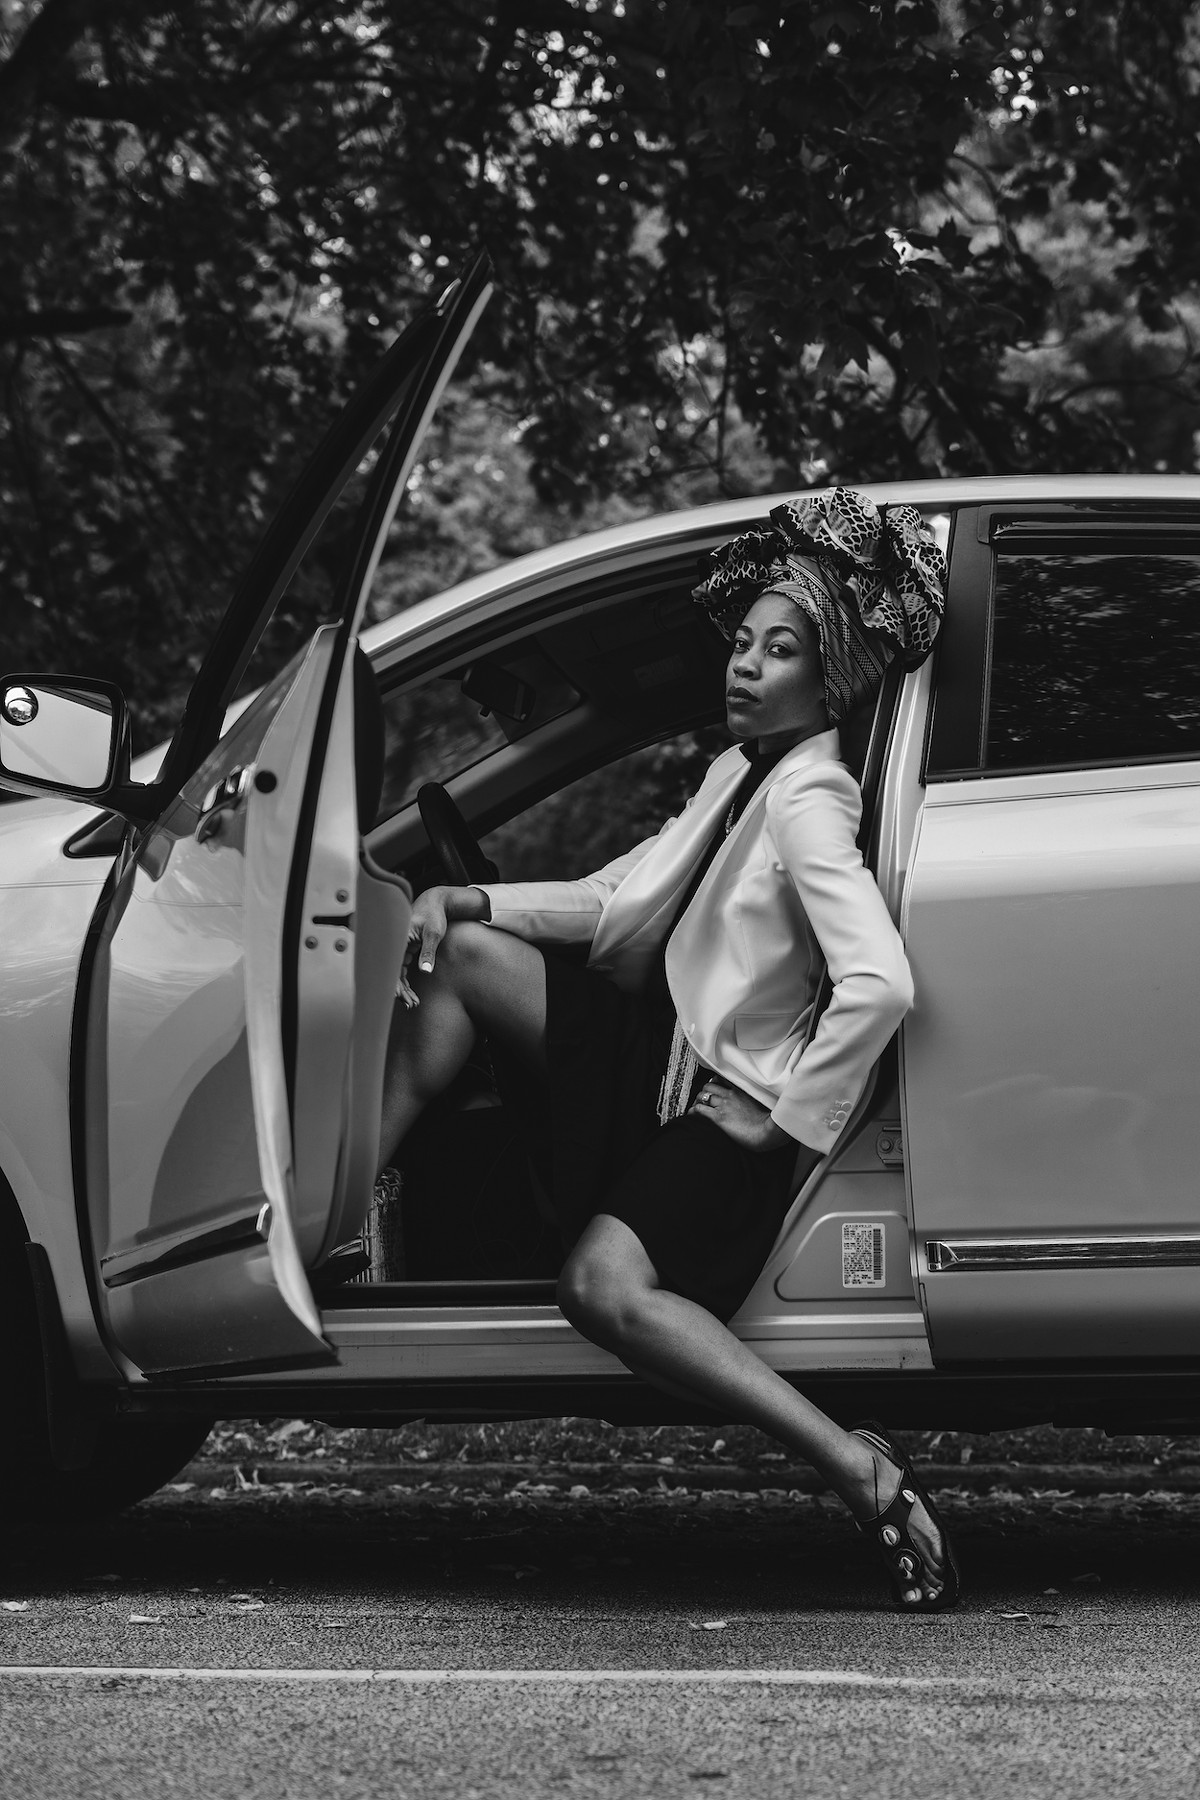 'The Driver,' Melissa Alexander (2020). Digital photograph